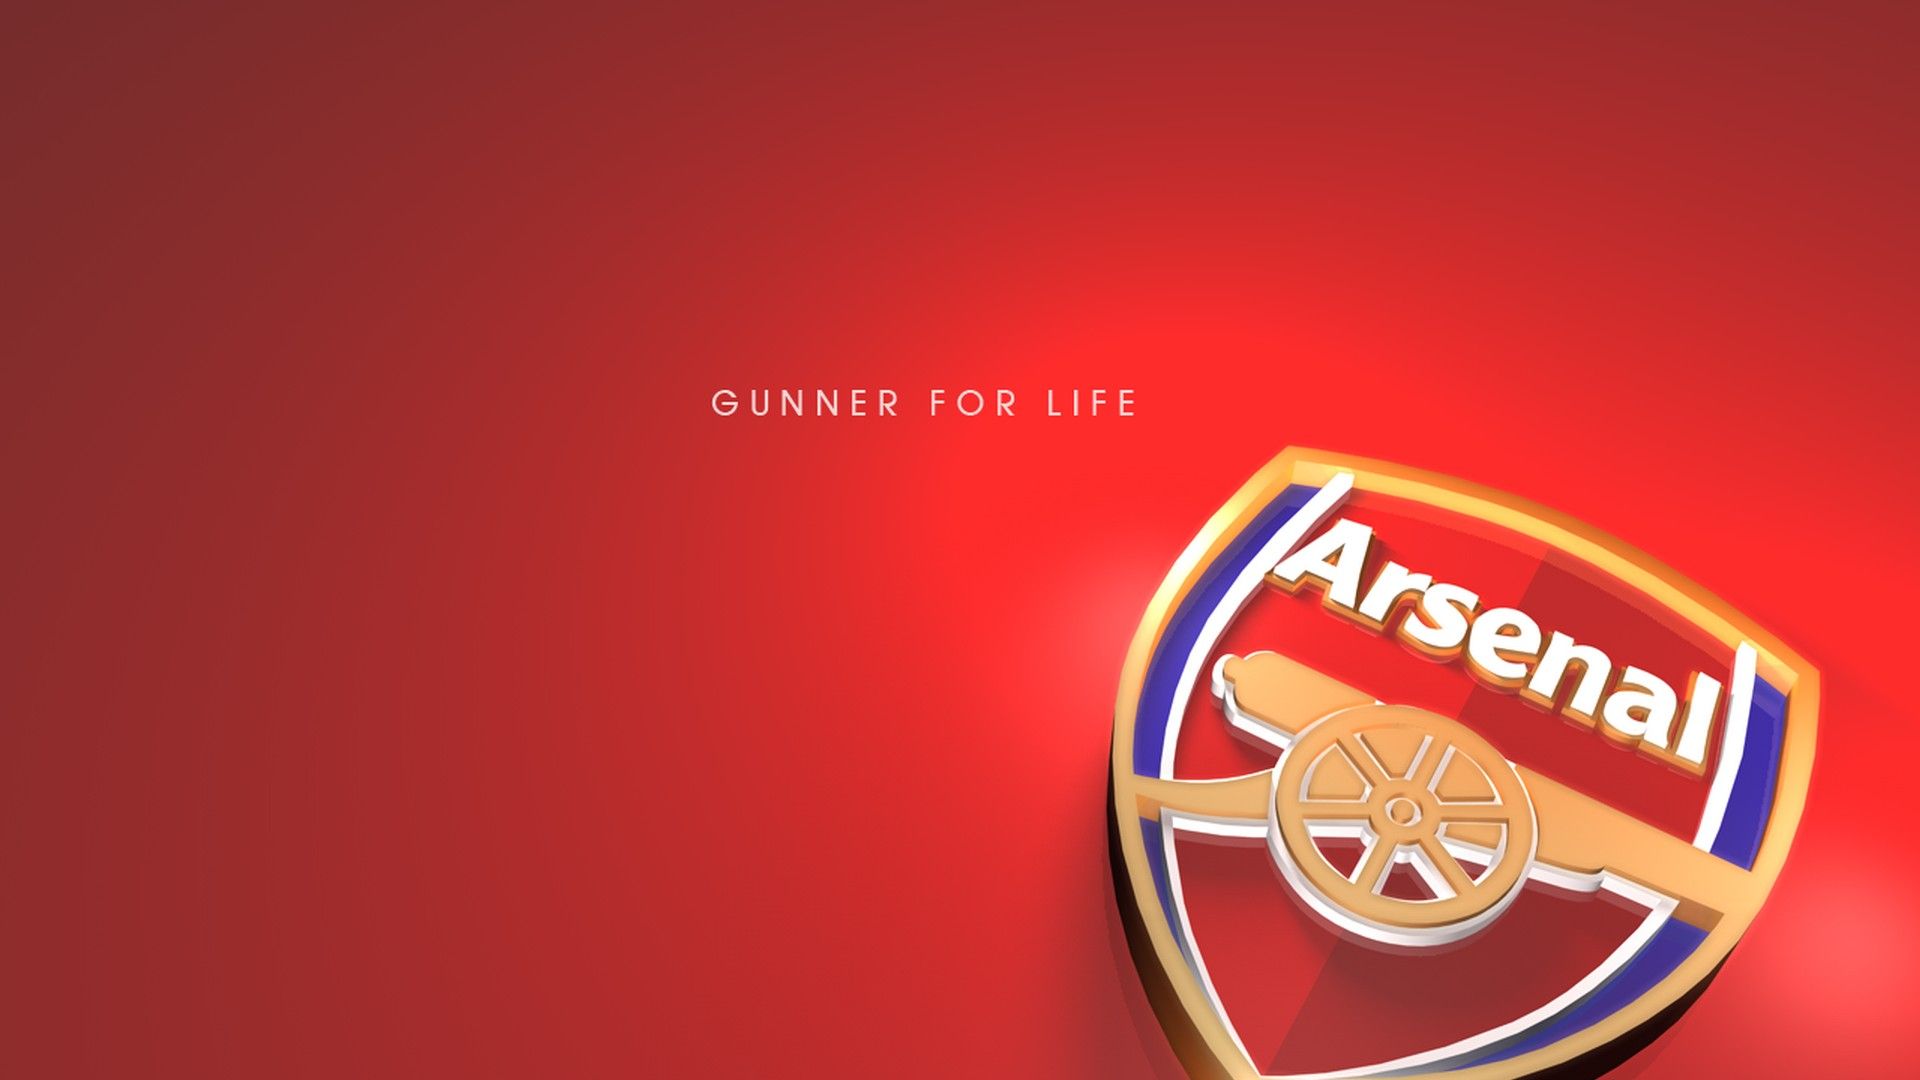 Arsenal Wallpaper For Mac. Best Football Wallpaper HD. Arsenal wallpaper, Football wallpaper, Arsenal